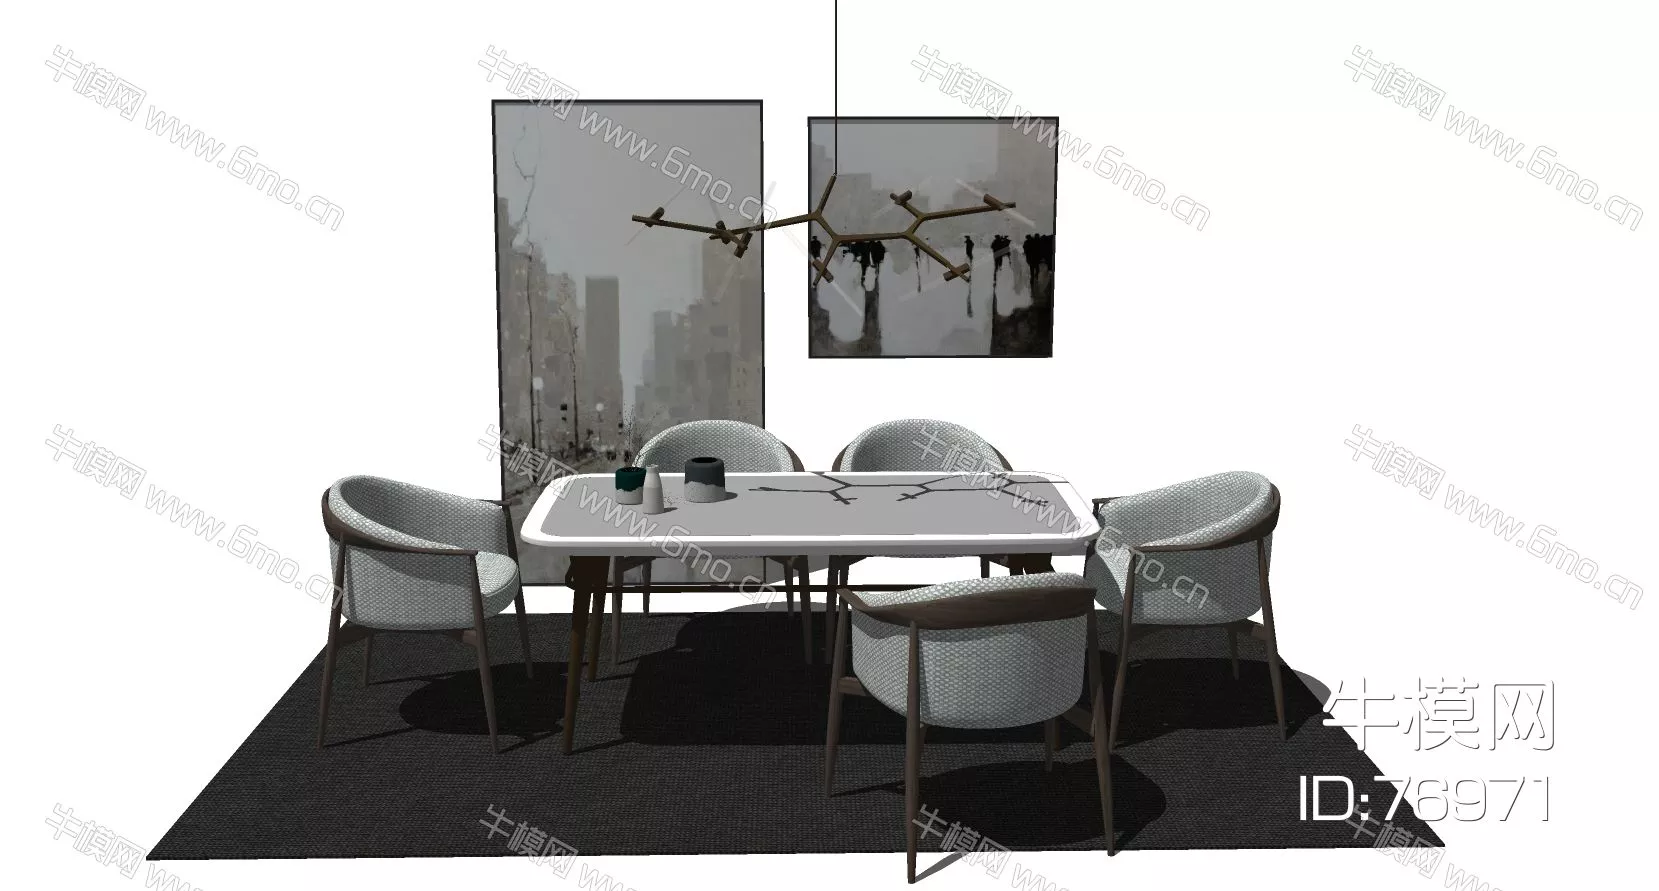 NORDIC DINING TABLE SET - SKETCHUP 3D MODEL - ENSCAPE - 76971